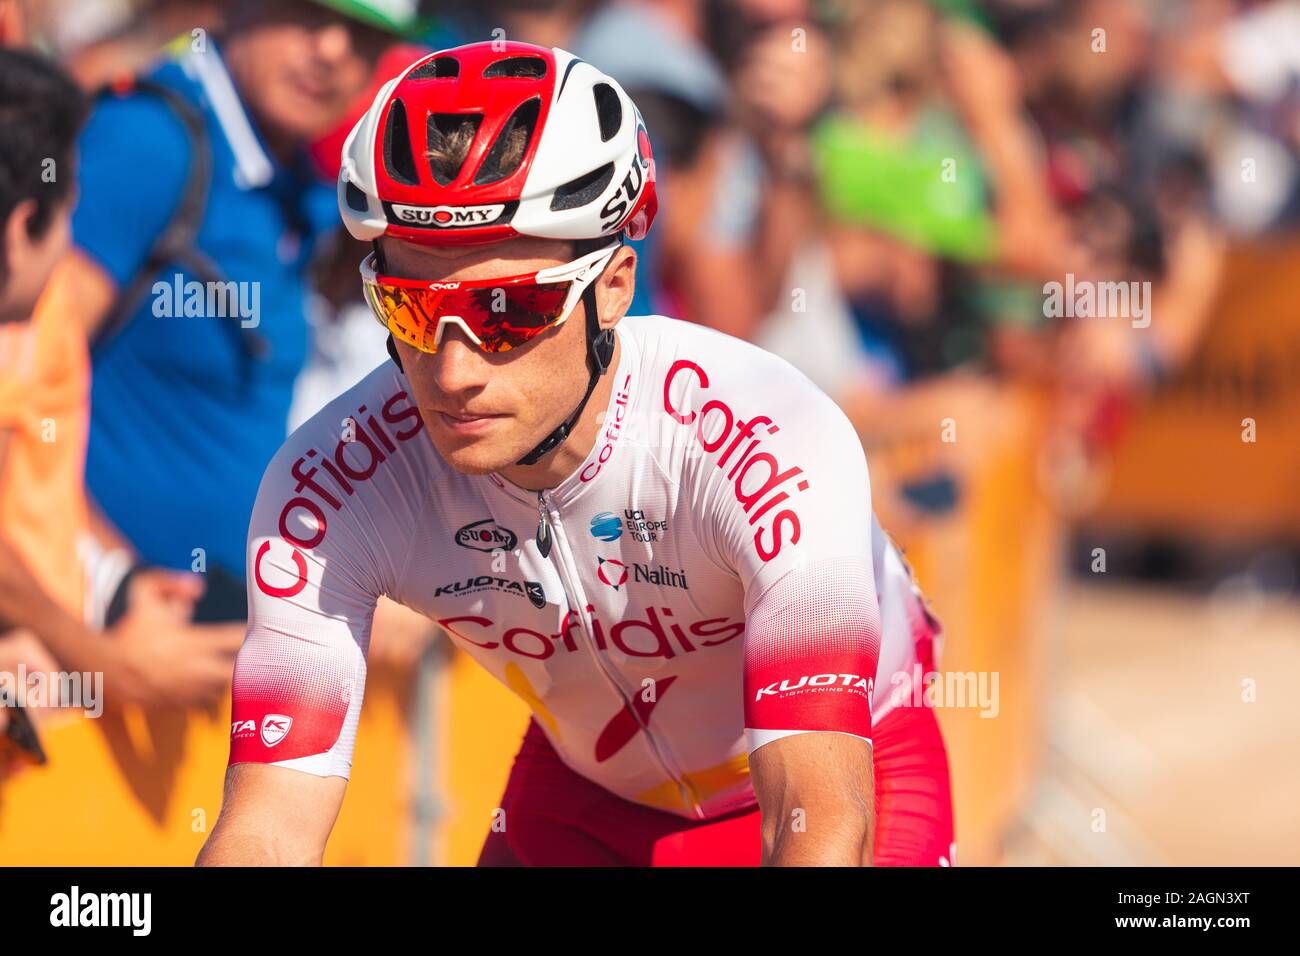 San Vicente de la Barquera, Spain-September 7, 2019: Damien TOUZE, cyclist of the Cofidis Team during stage 14 of La Vuelta a España. Stock Photo